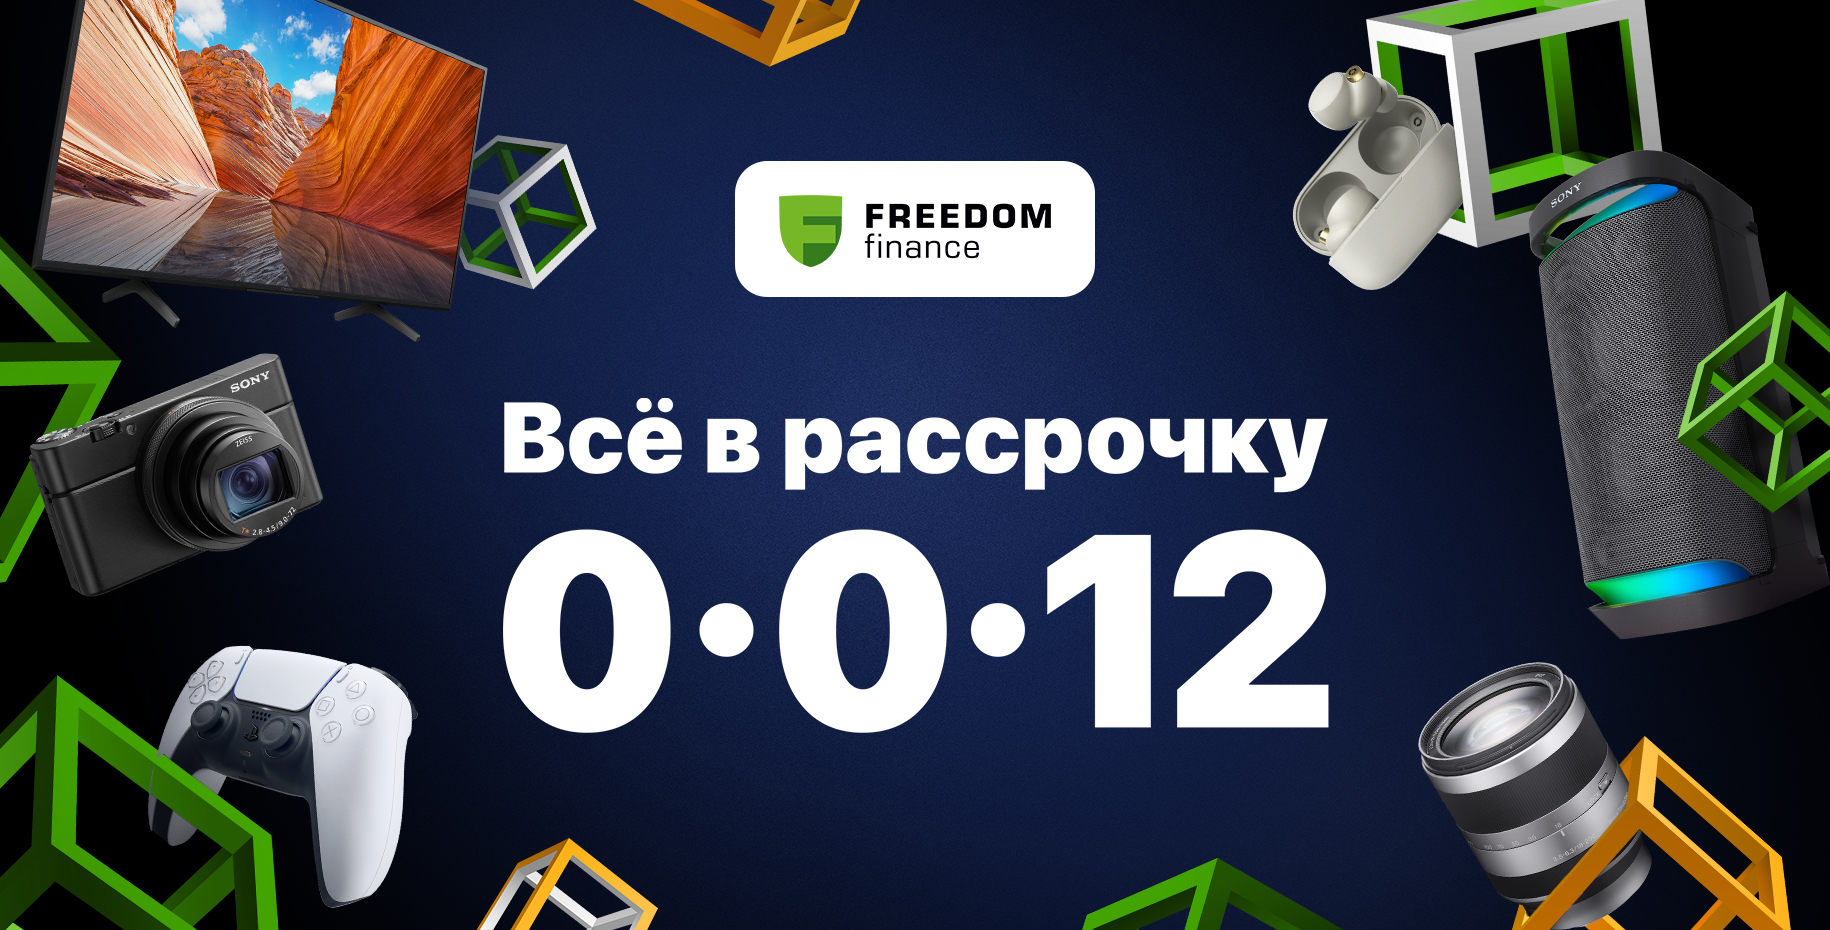 Рассрочка Freedom Finance 0-0-12